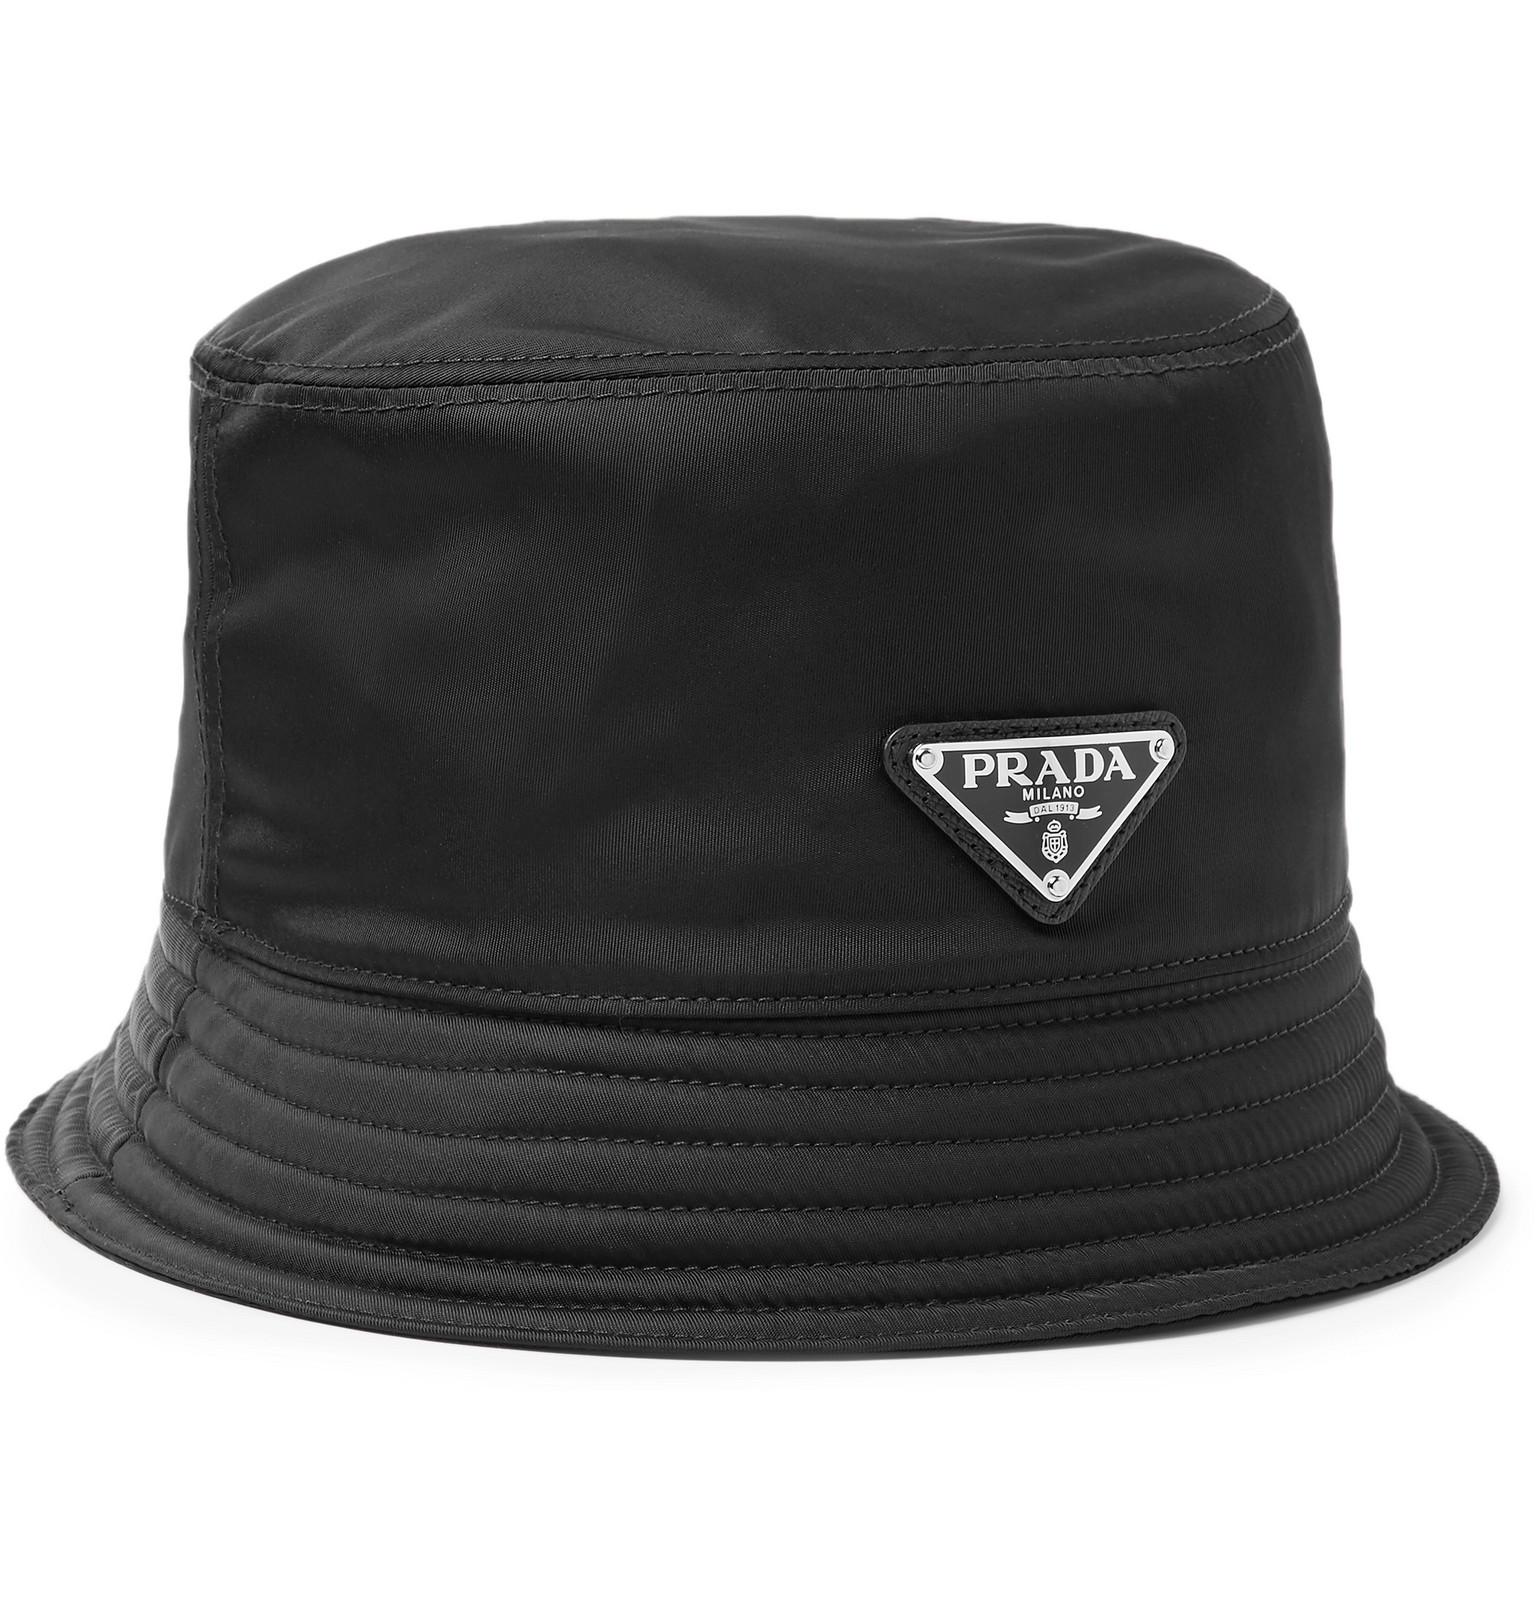 Prada Synthetic Logo-appliquéd Nylon Bucket Hat in Black for Men - Lyst